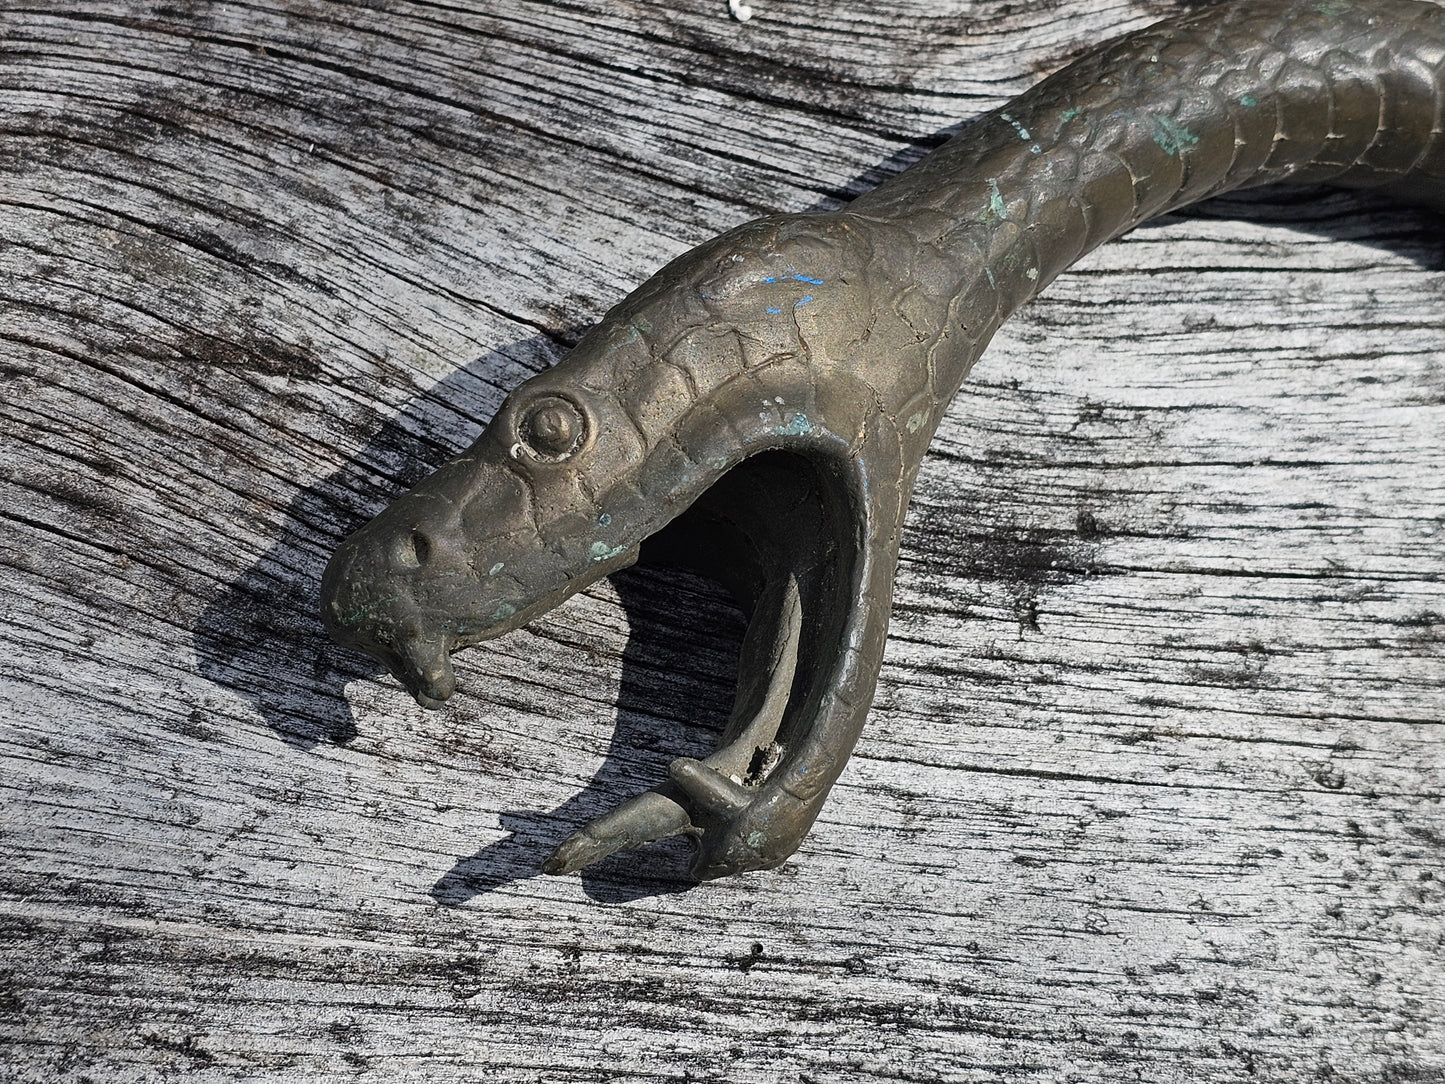 Heavy solid cast metal (bronze?) snake head, 17"